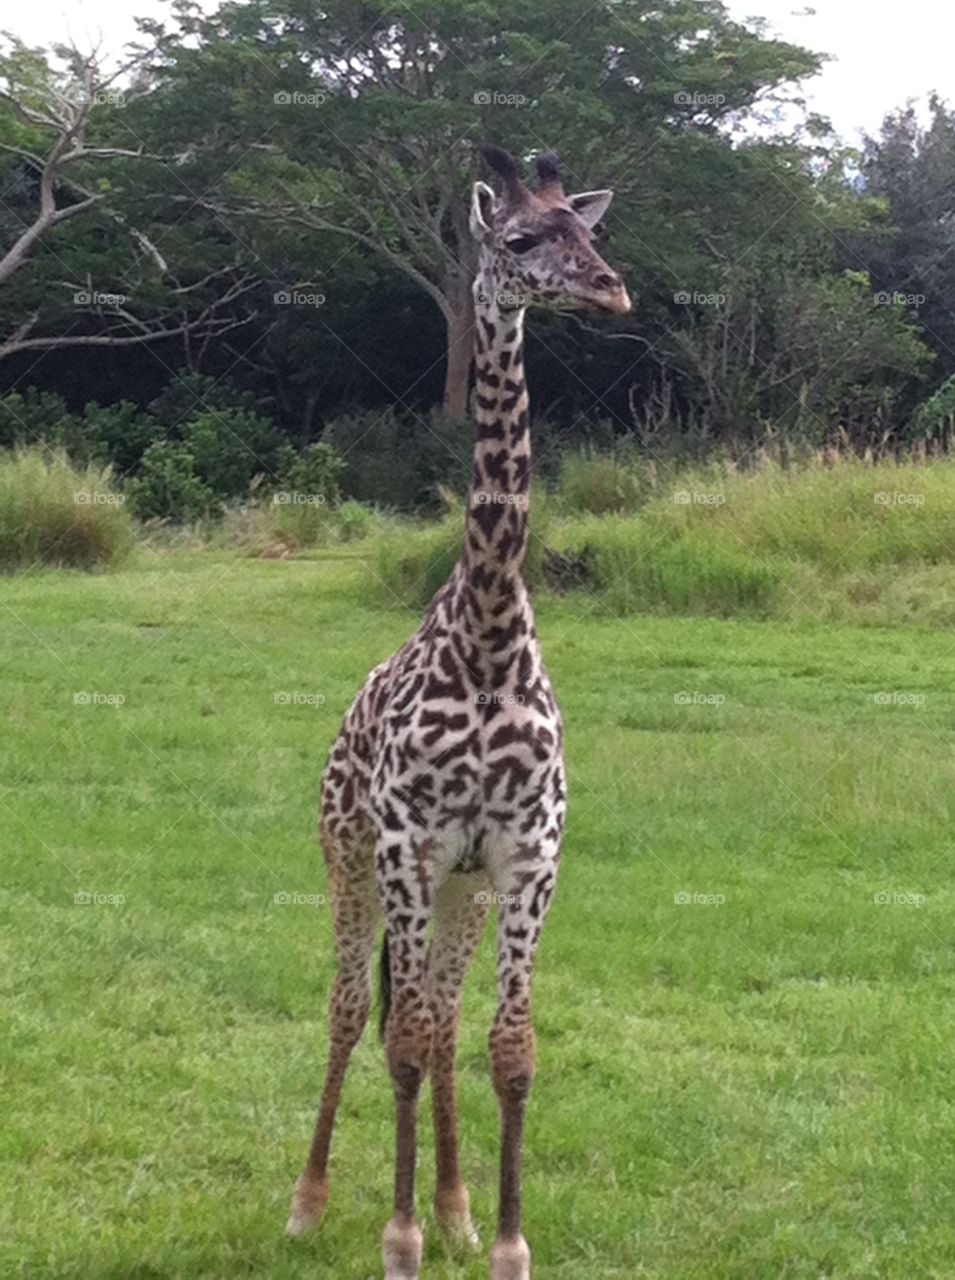 Baby Giraffe. Baby giraffe